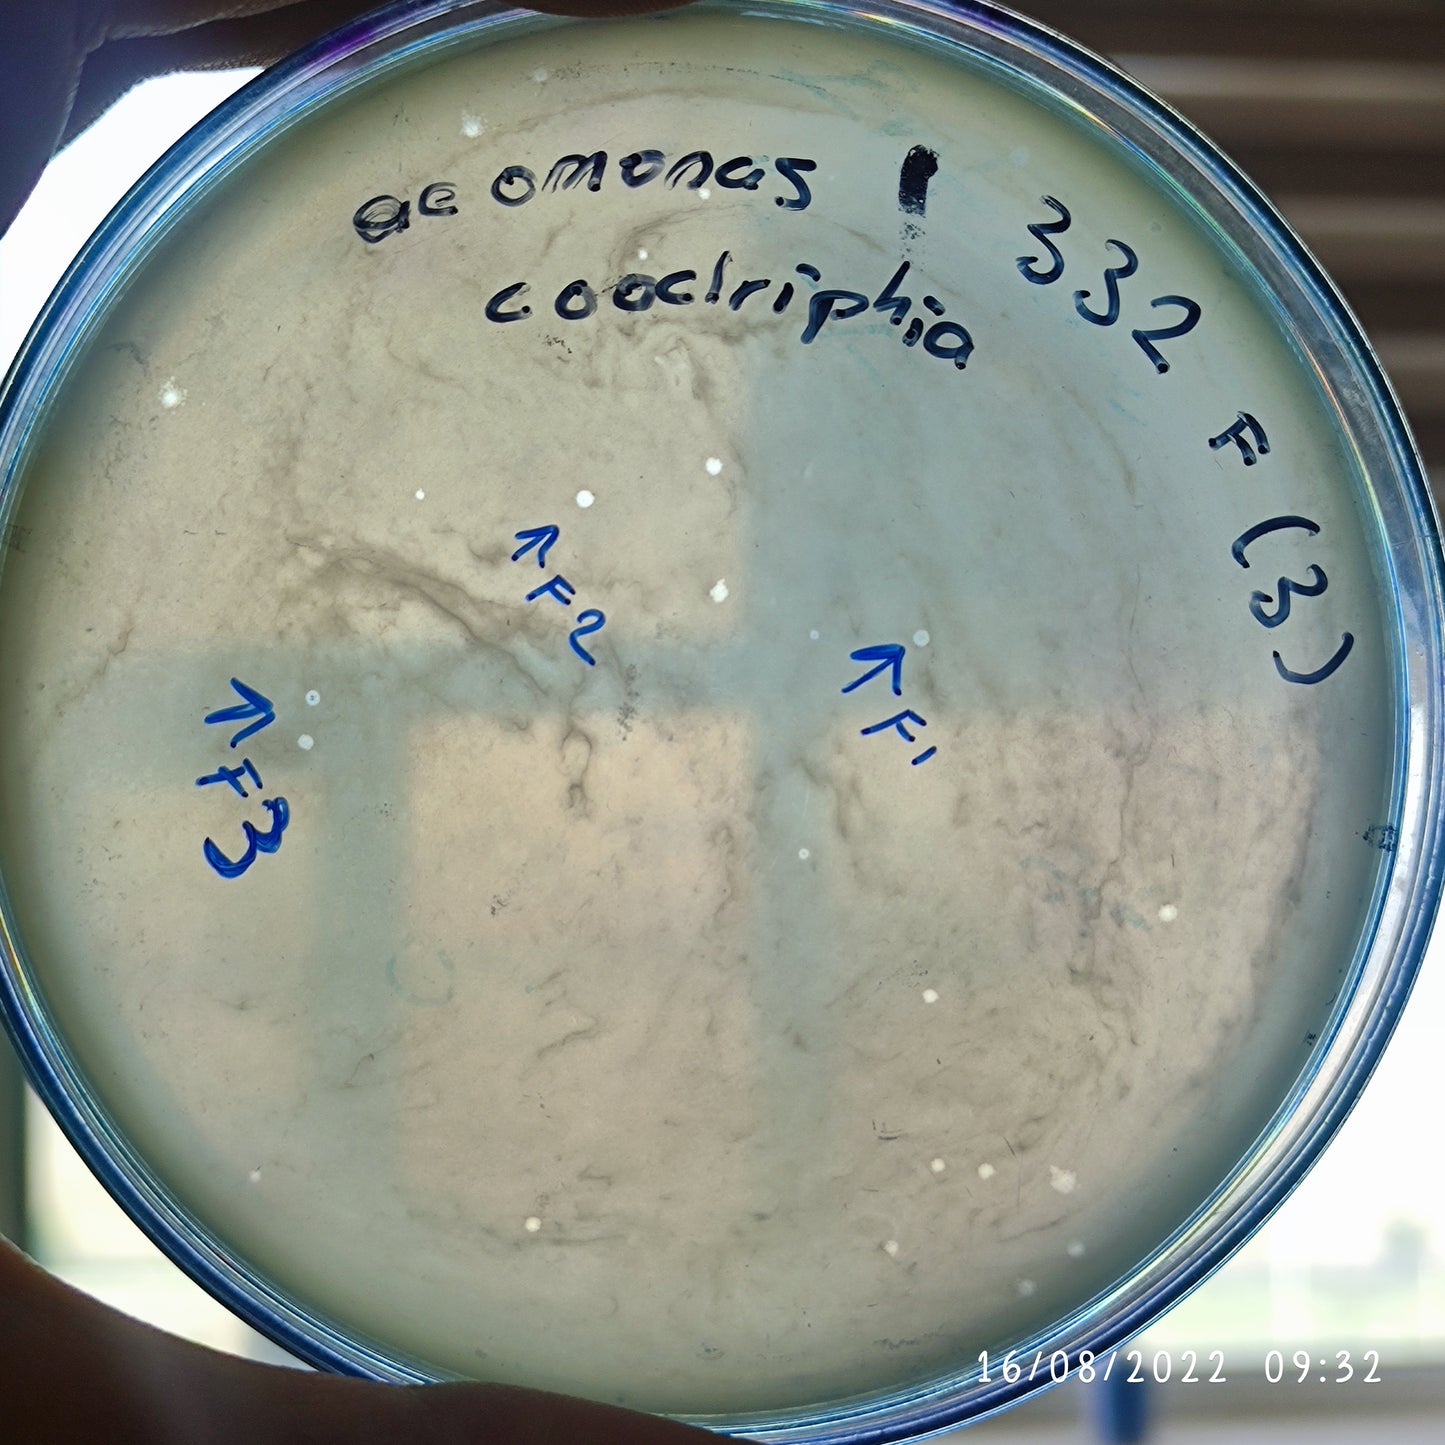 Aeromonas eucrenophila bacteriophage 200332F